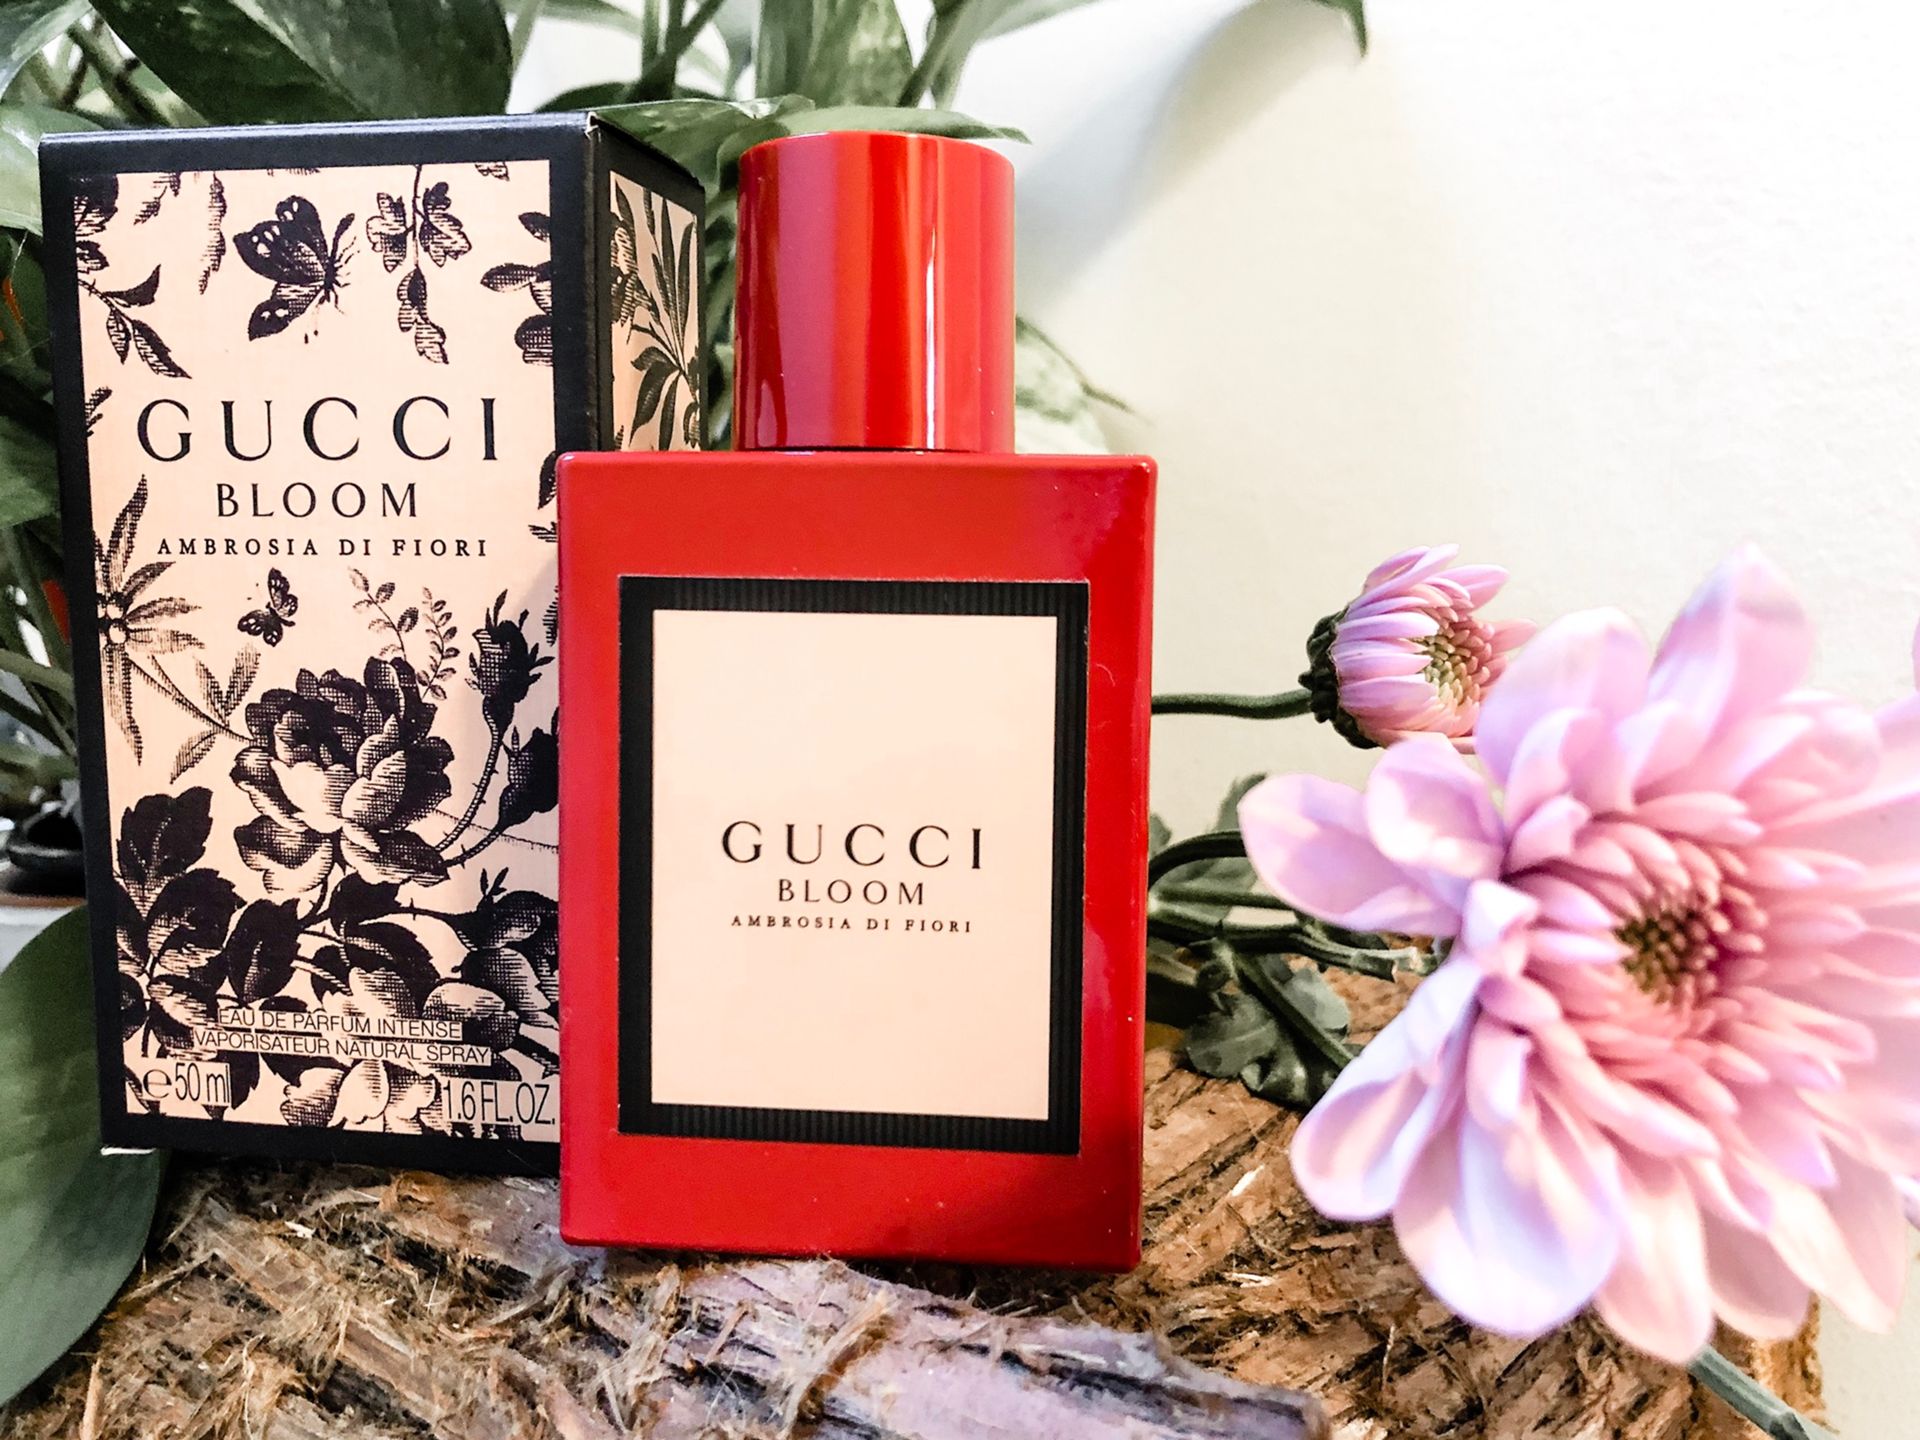 macys perfume gucci bloom